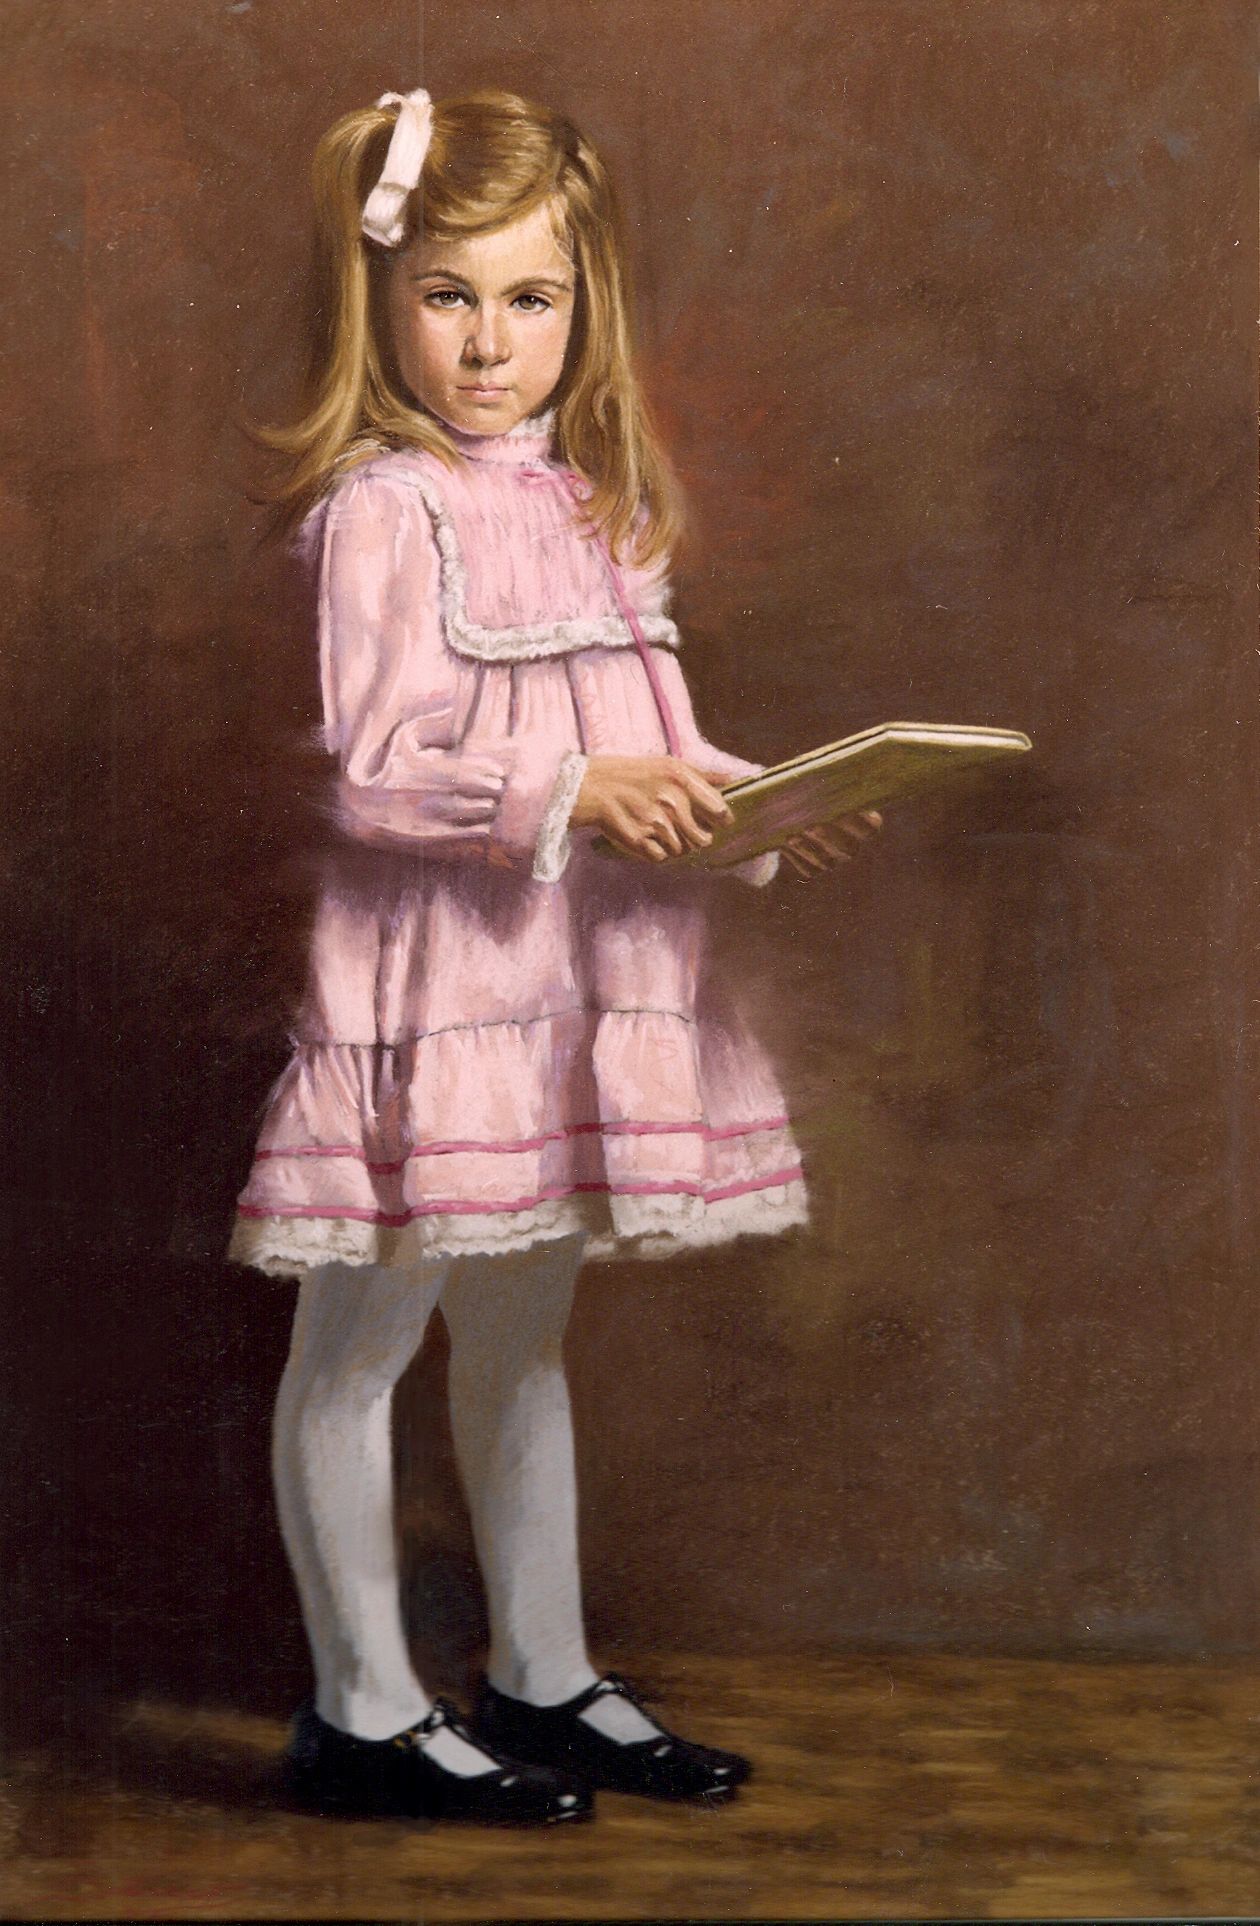 Full-length child portrait commission.